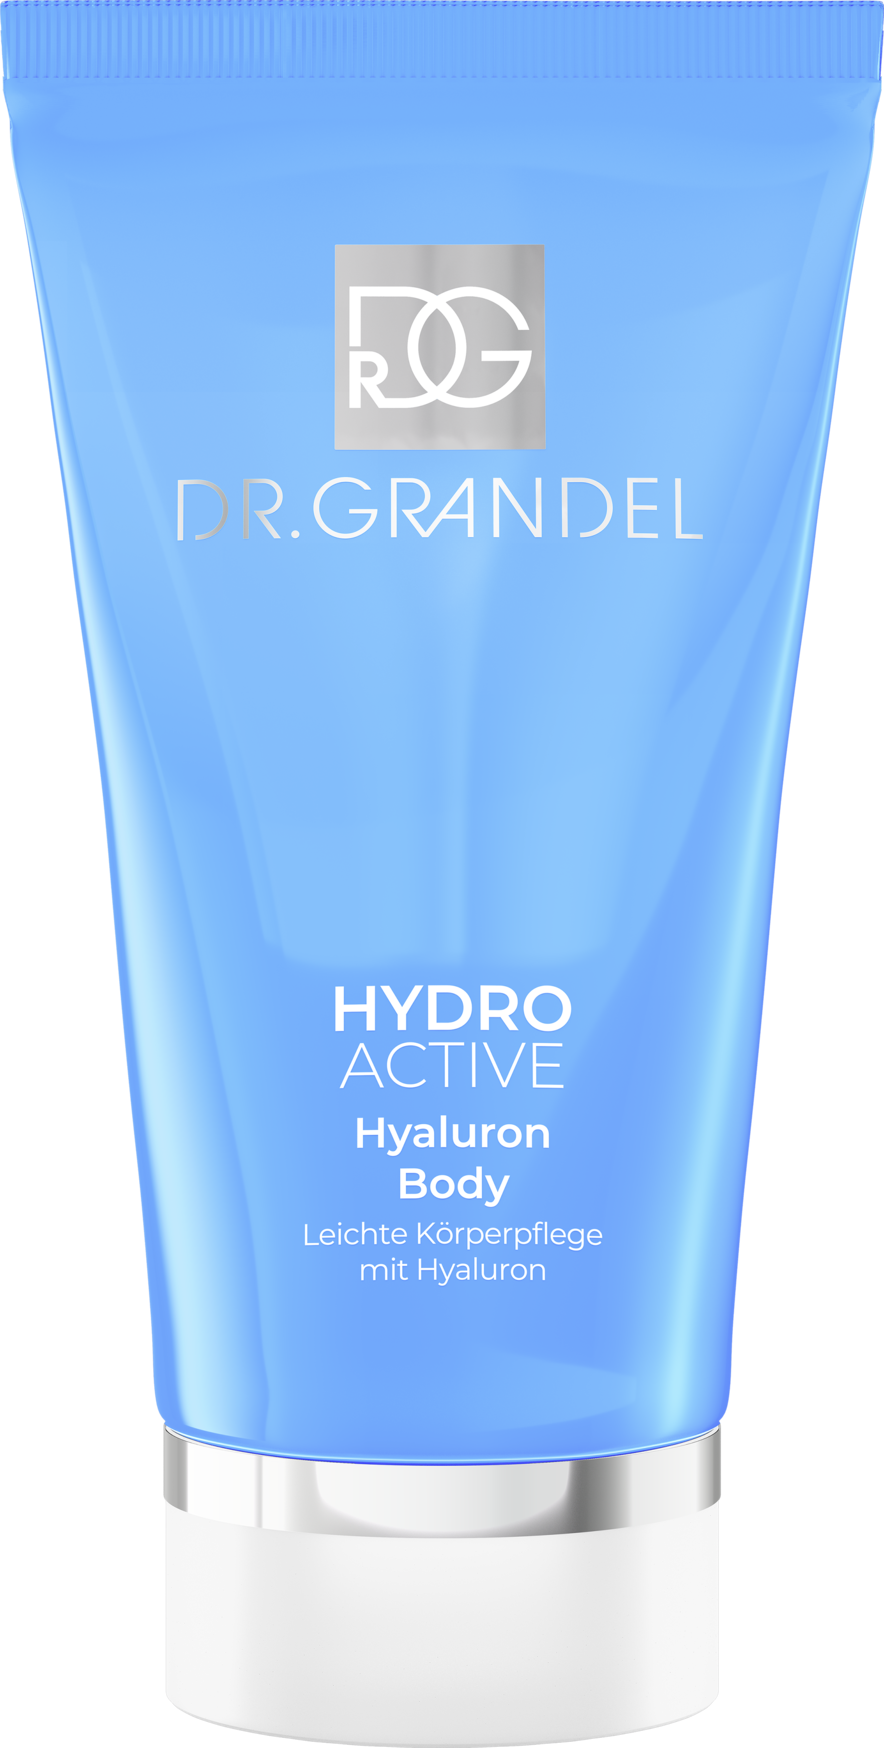 Grandel Hydro Active Hyaluron Body Creme 150 Ml Dr Grandel Kosmetik Apotheke4youde 3591